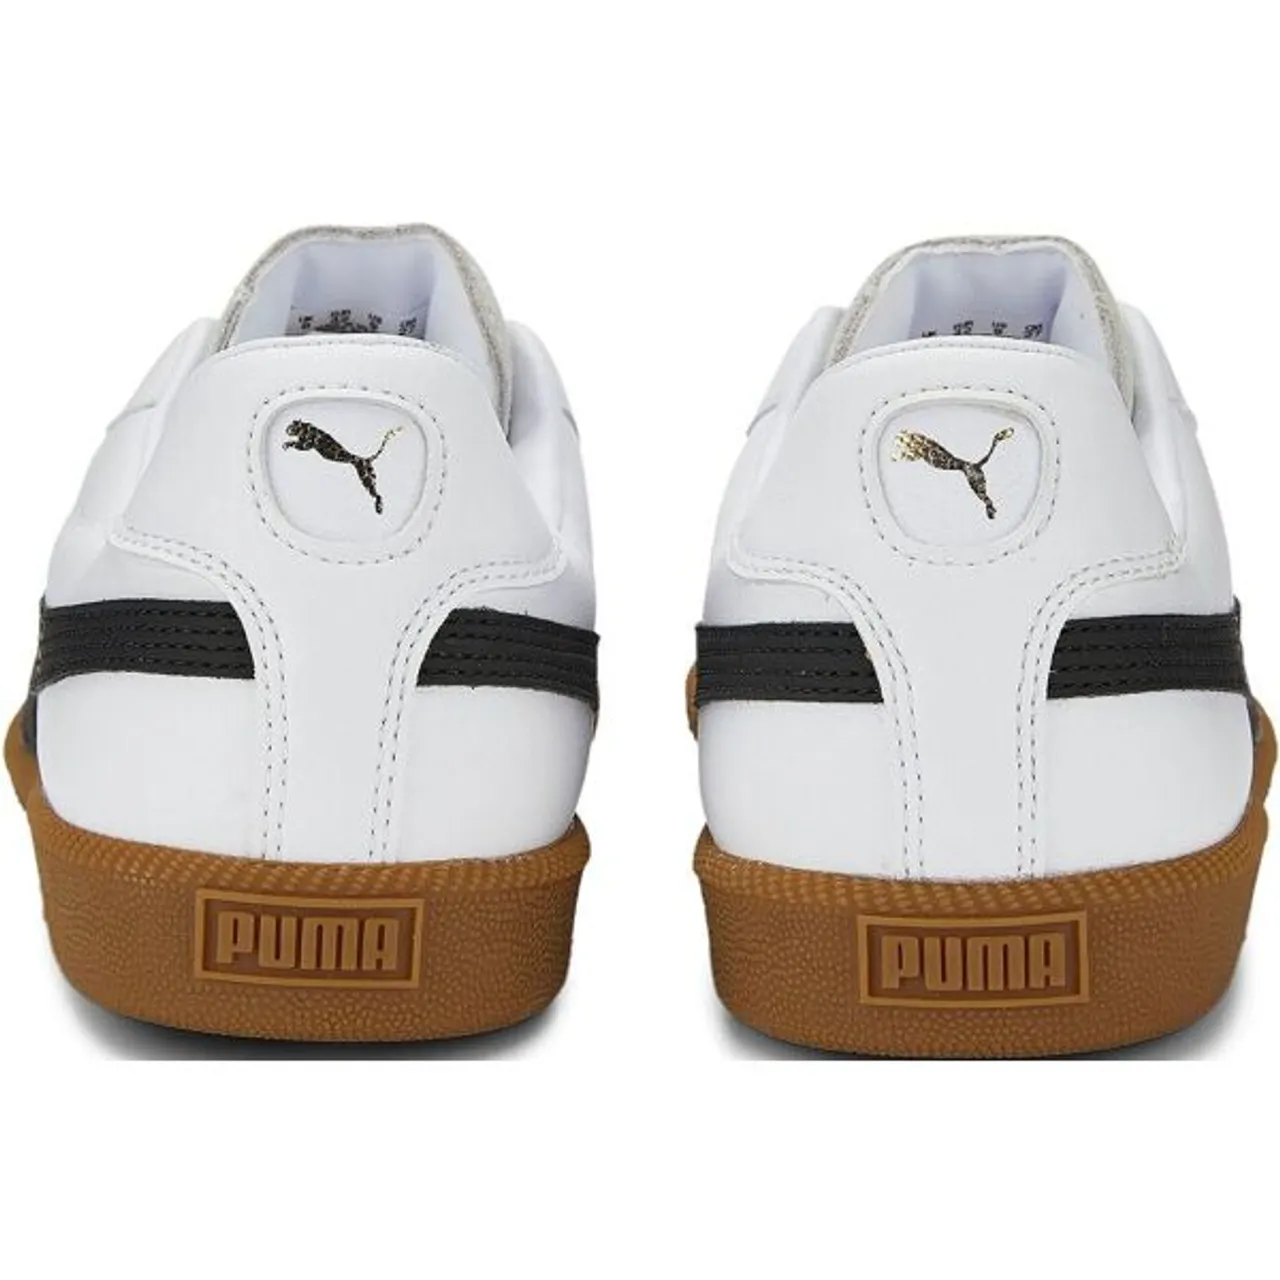 Sneaker PUMA "KING 21 IT" Gr. 44, schwarz-weiß (puma white, puma black, gum) Schuhe Fußballschuhe